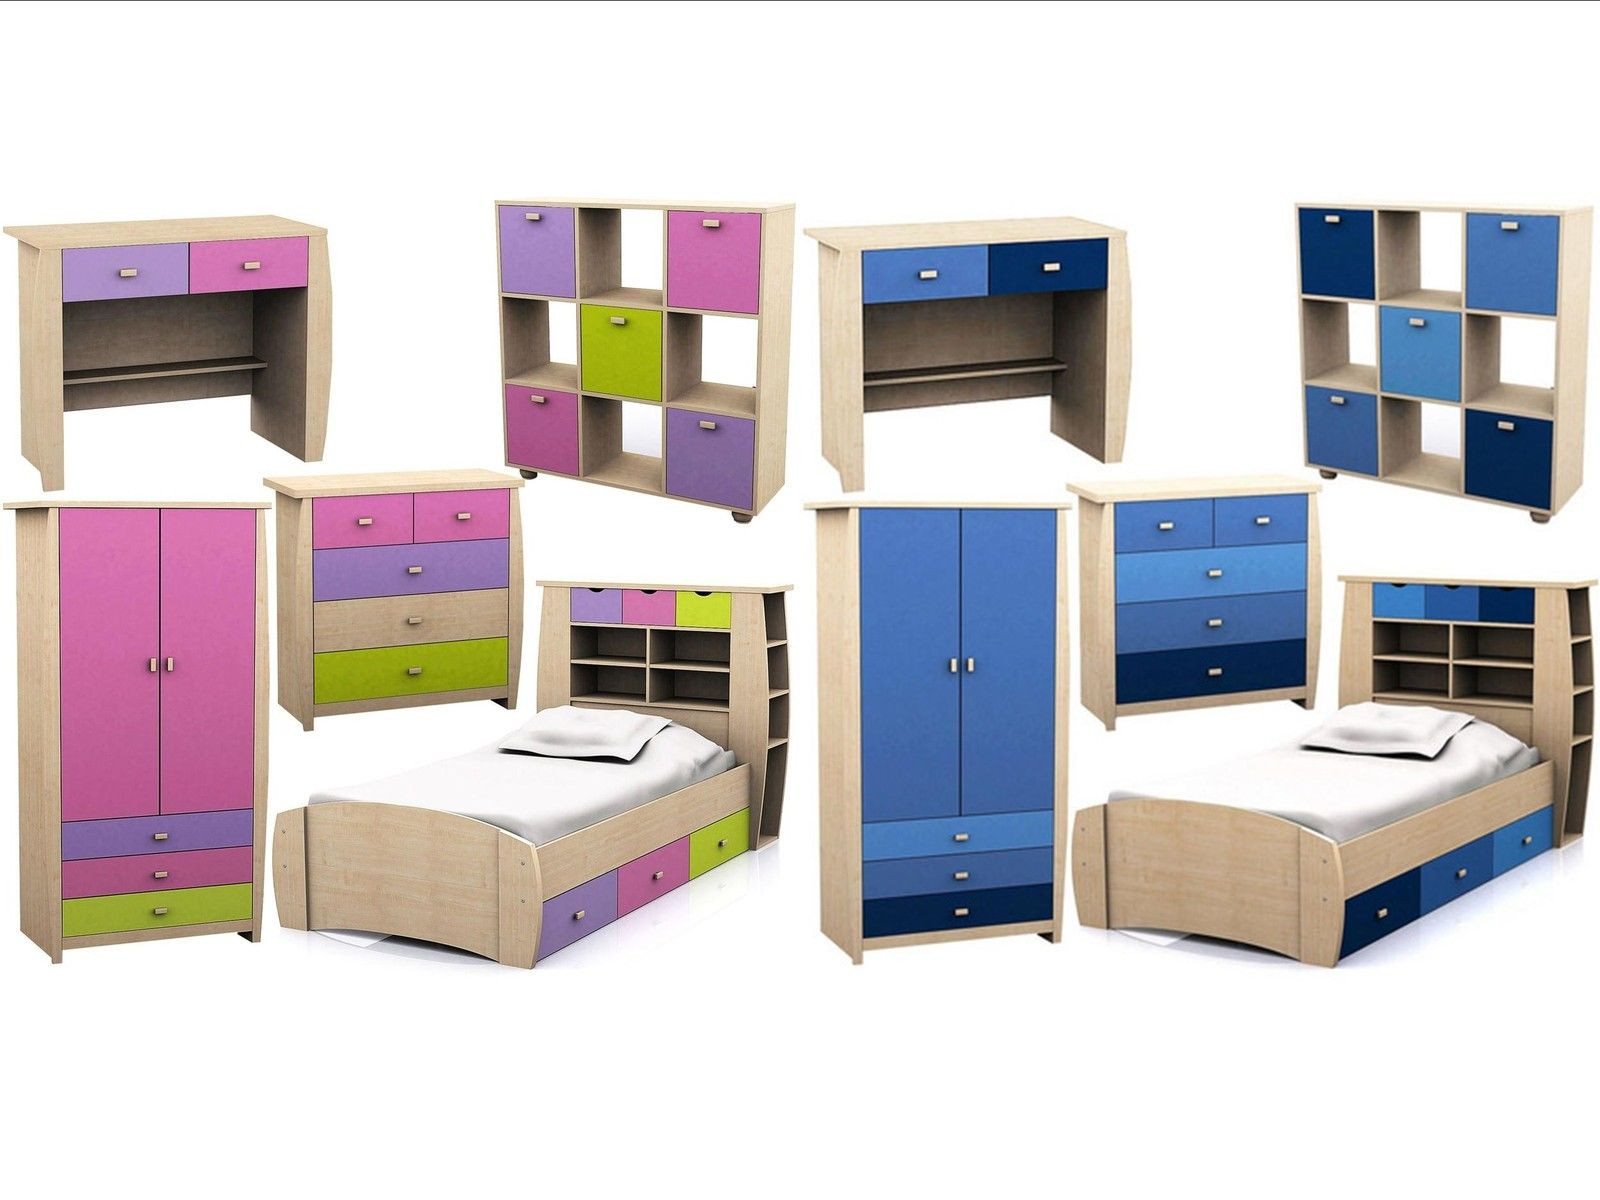 Childrens Storage Furniture
 Sydney Childrens Bedroom Range Pink or Blue Storage